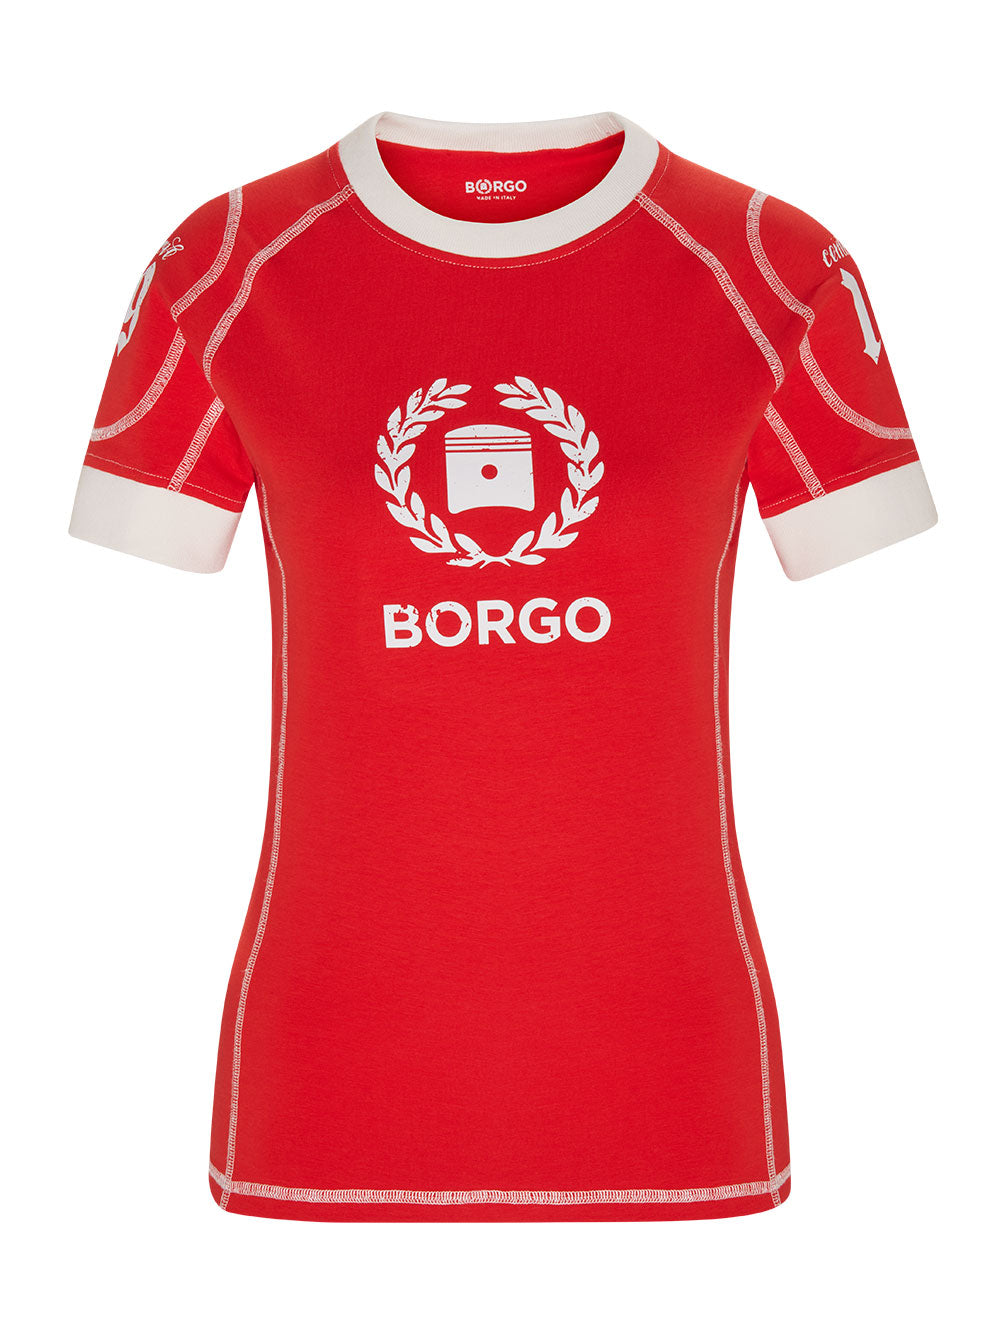 BORGO Andalusia Diablo Rosso T-Shirt